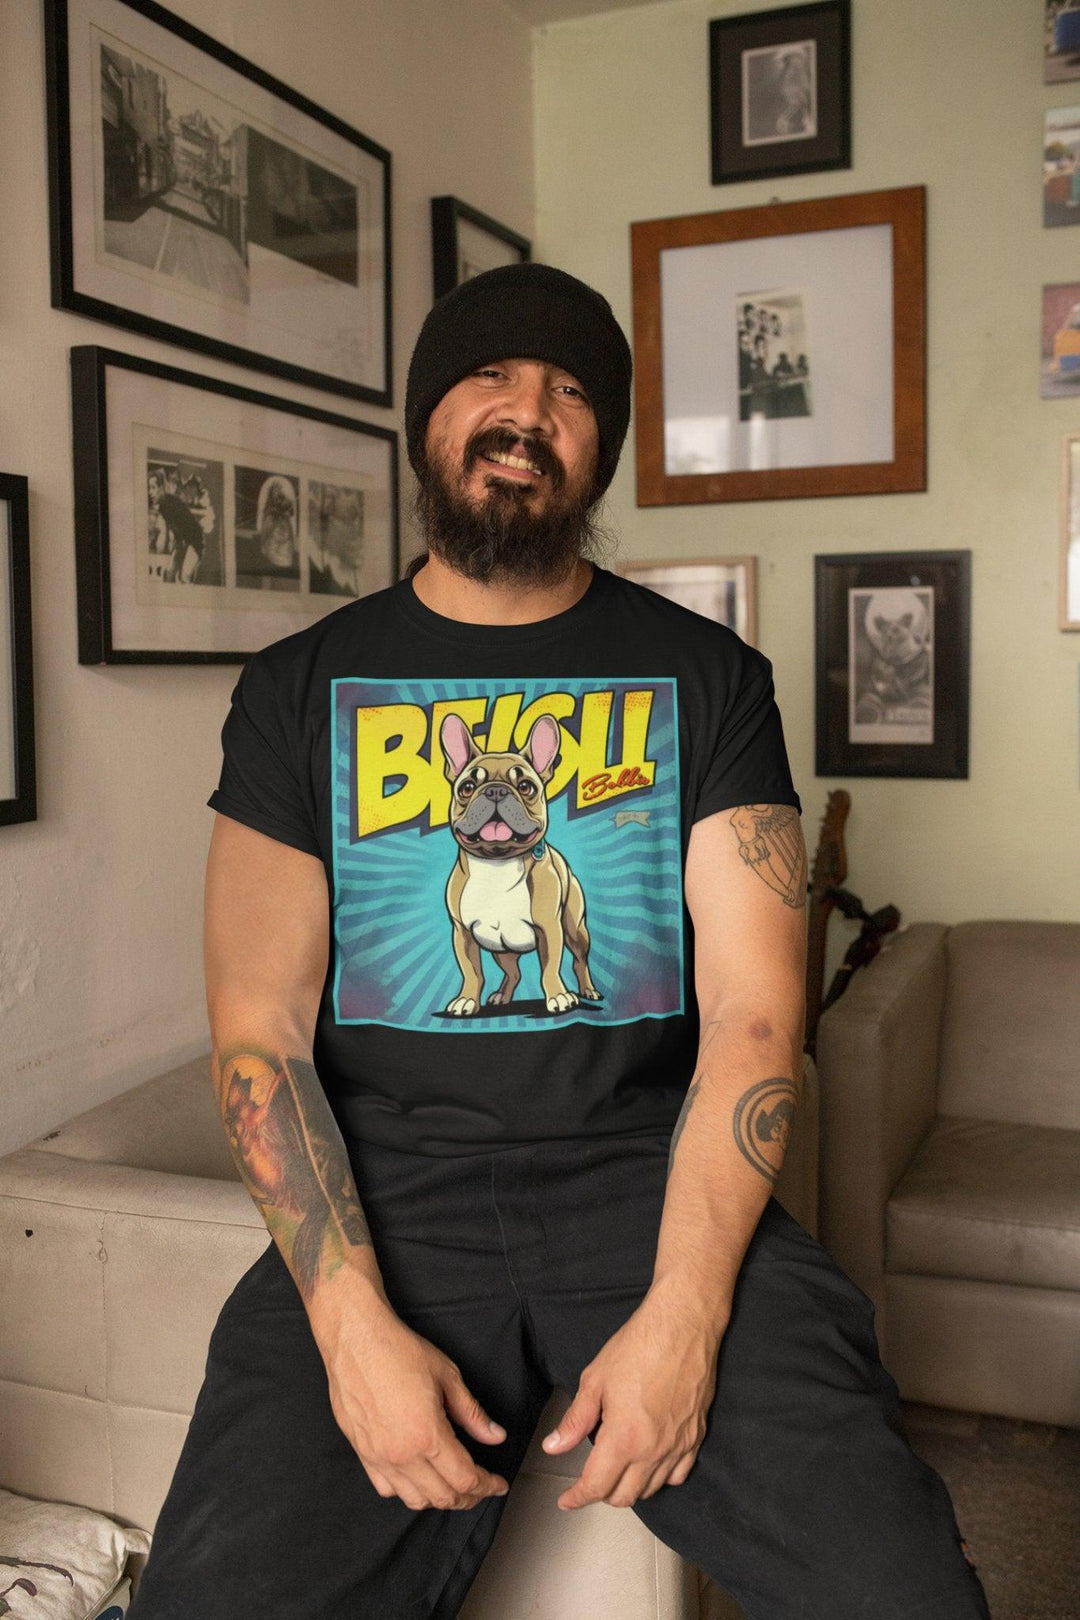 French Beill Herren-T-Shirt - Bobbis Store Hunde